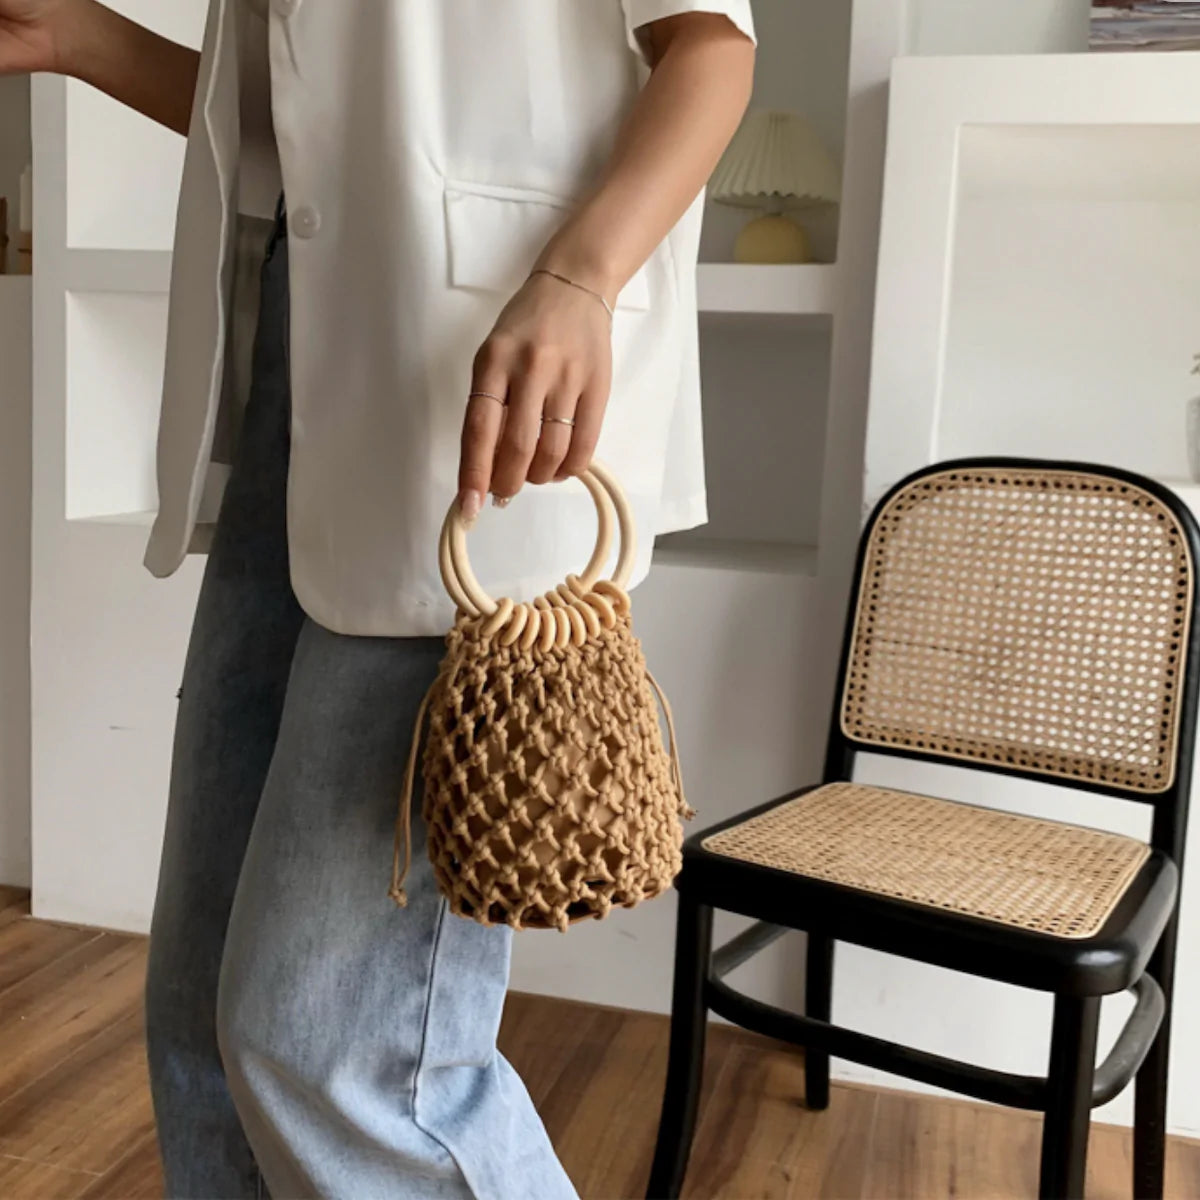 Rattan Ring Handle Crochet Bag for Stylish Summer Looks